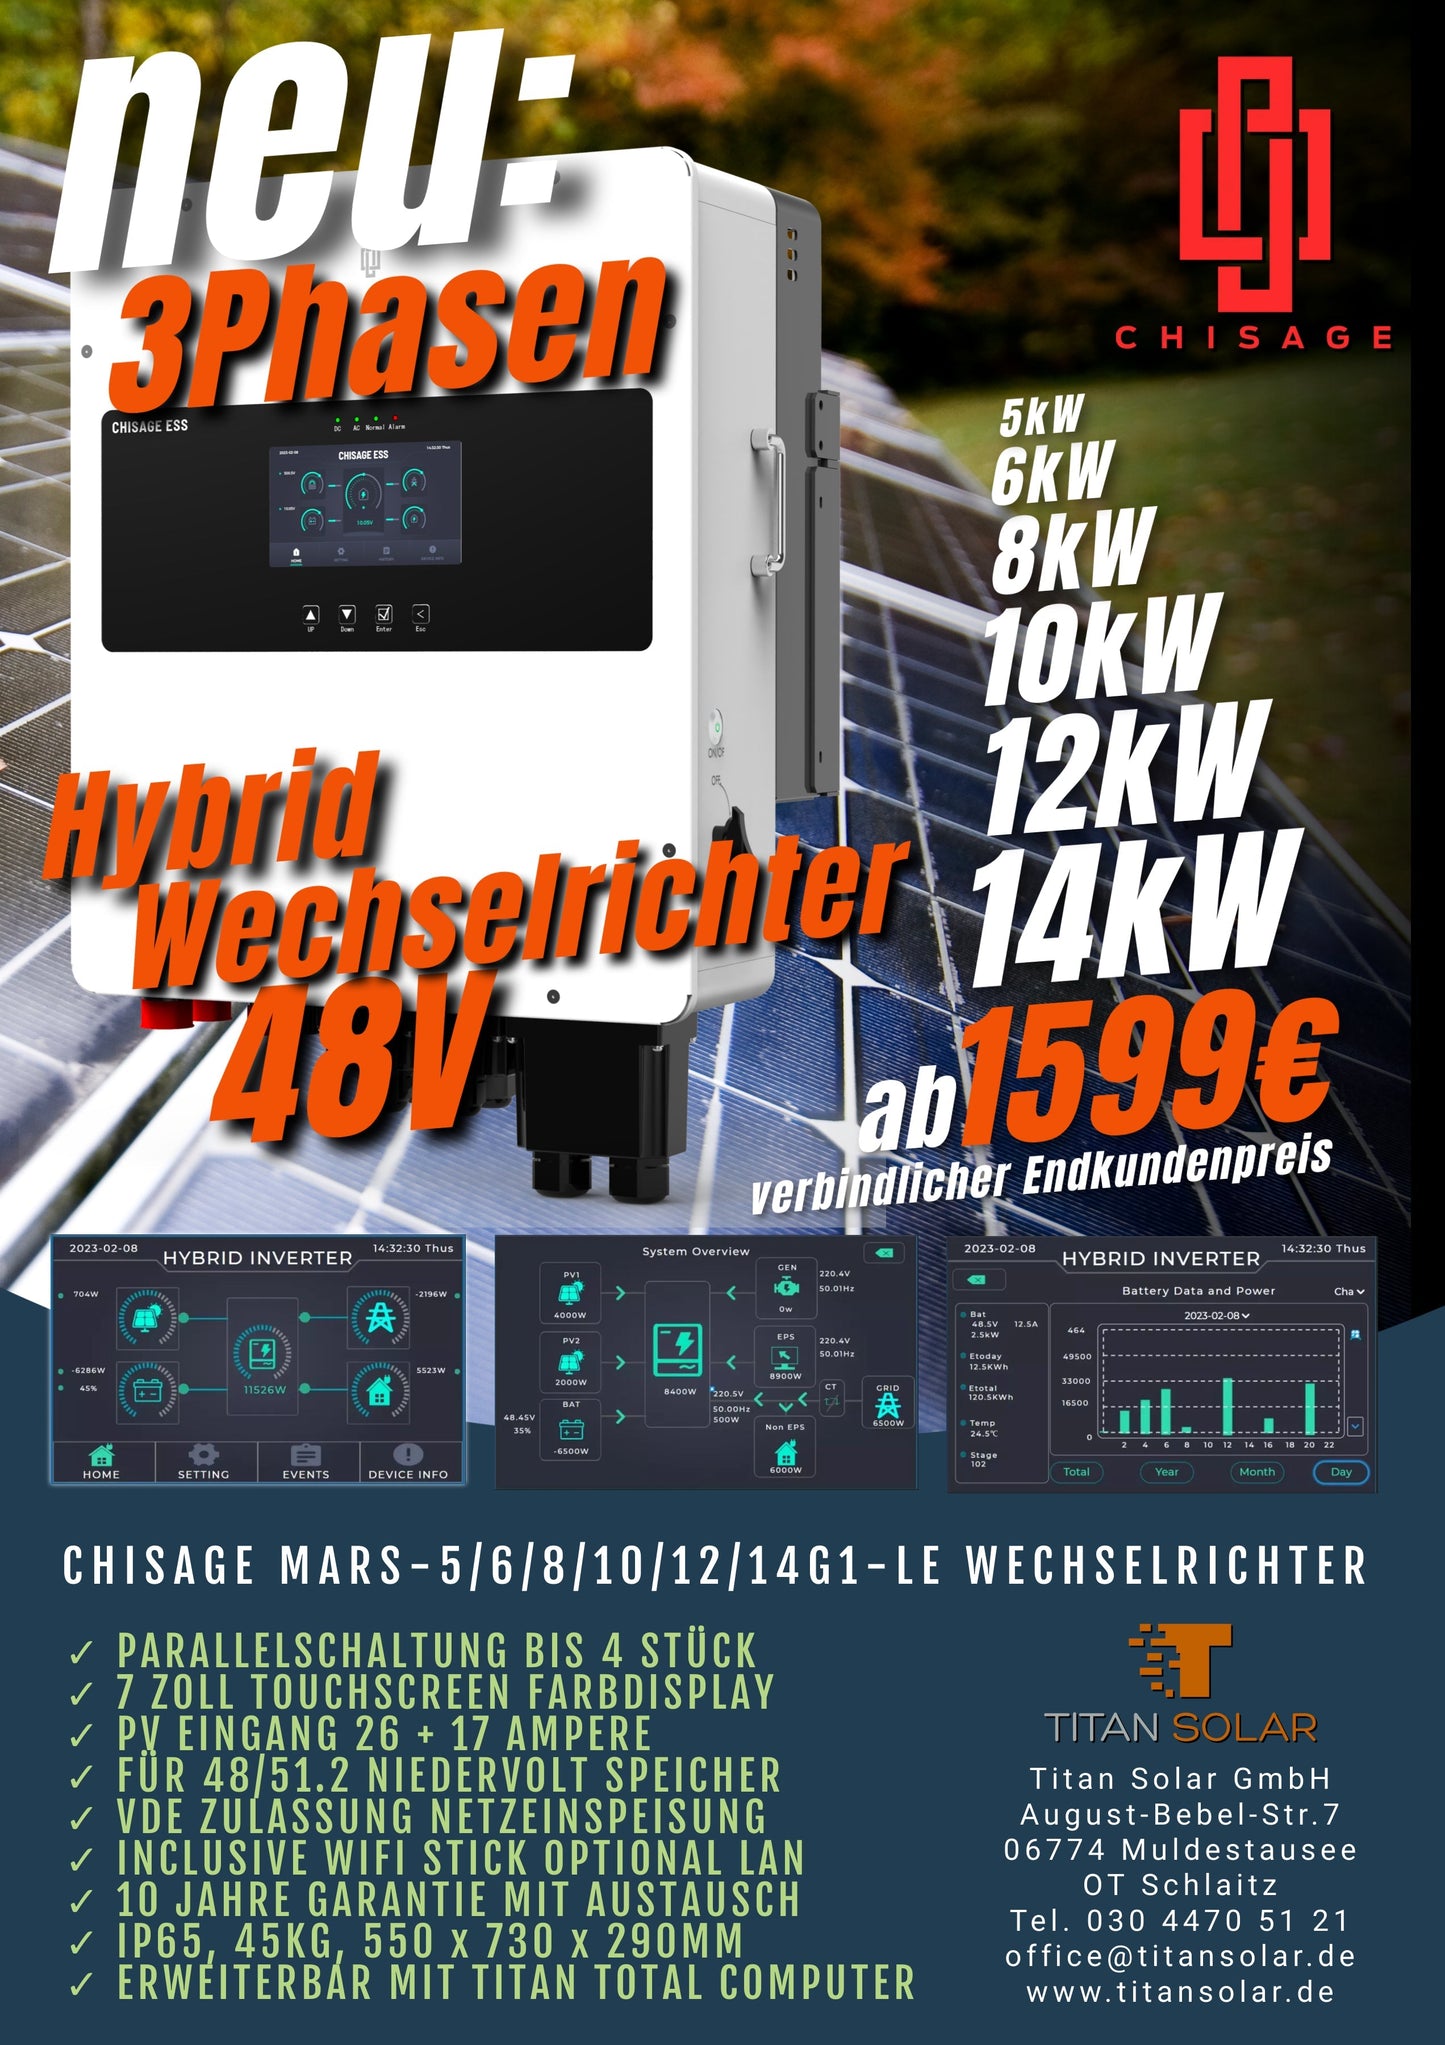 Art. 1510 - 10Kw Titan Solar Chisage Mars-10G2-LE 3 Phasen Hybrid Inverter mit WiFi VDE